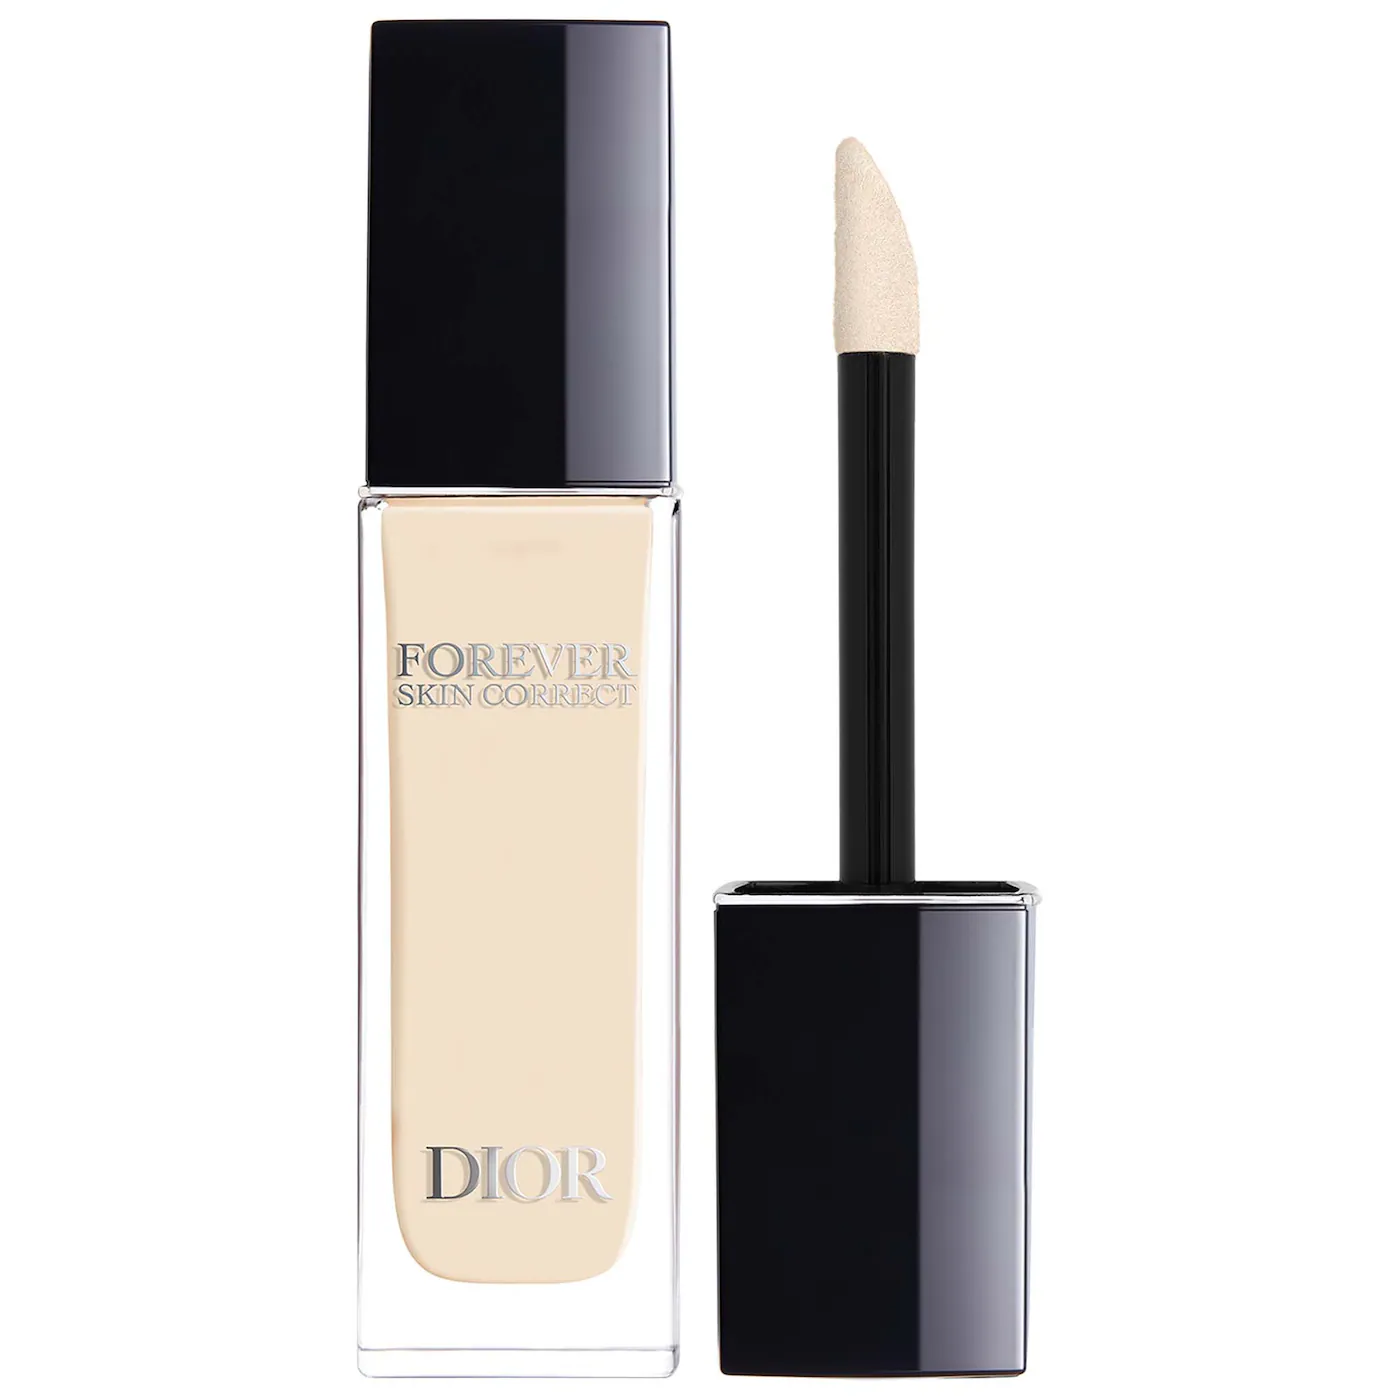 Dior - Увлажняющий кремовый консилер Forever Skin Correct Full-Coverage Concealer - Фото 1